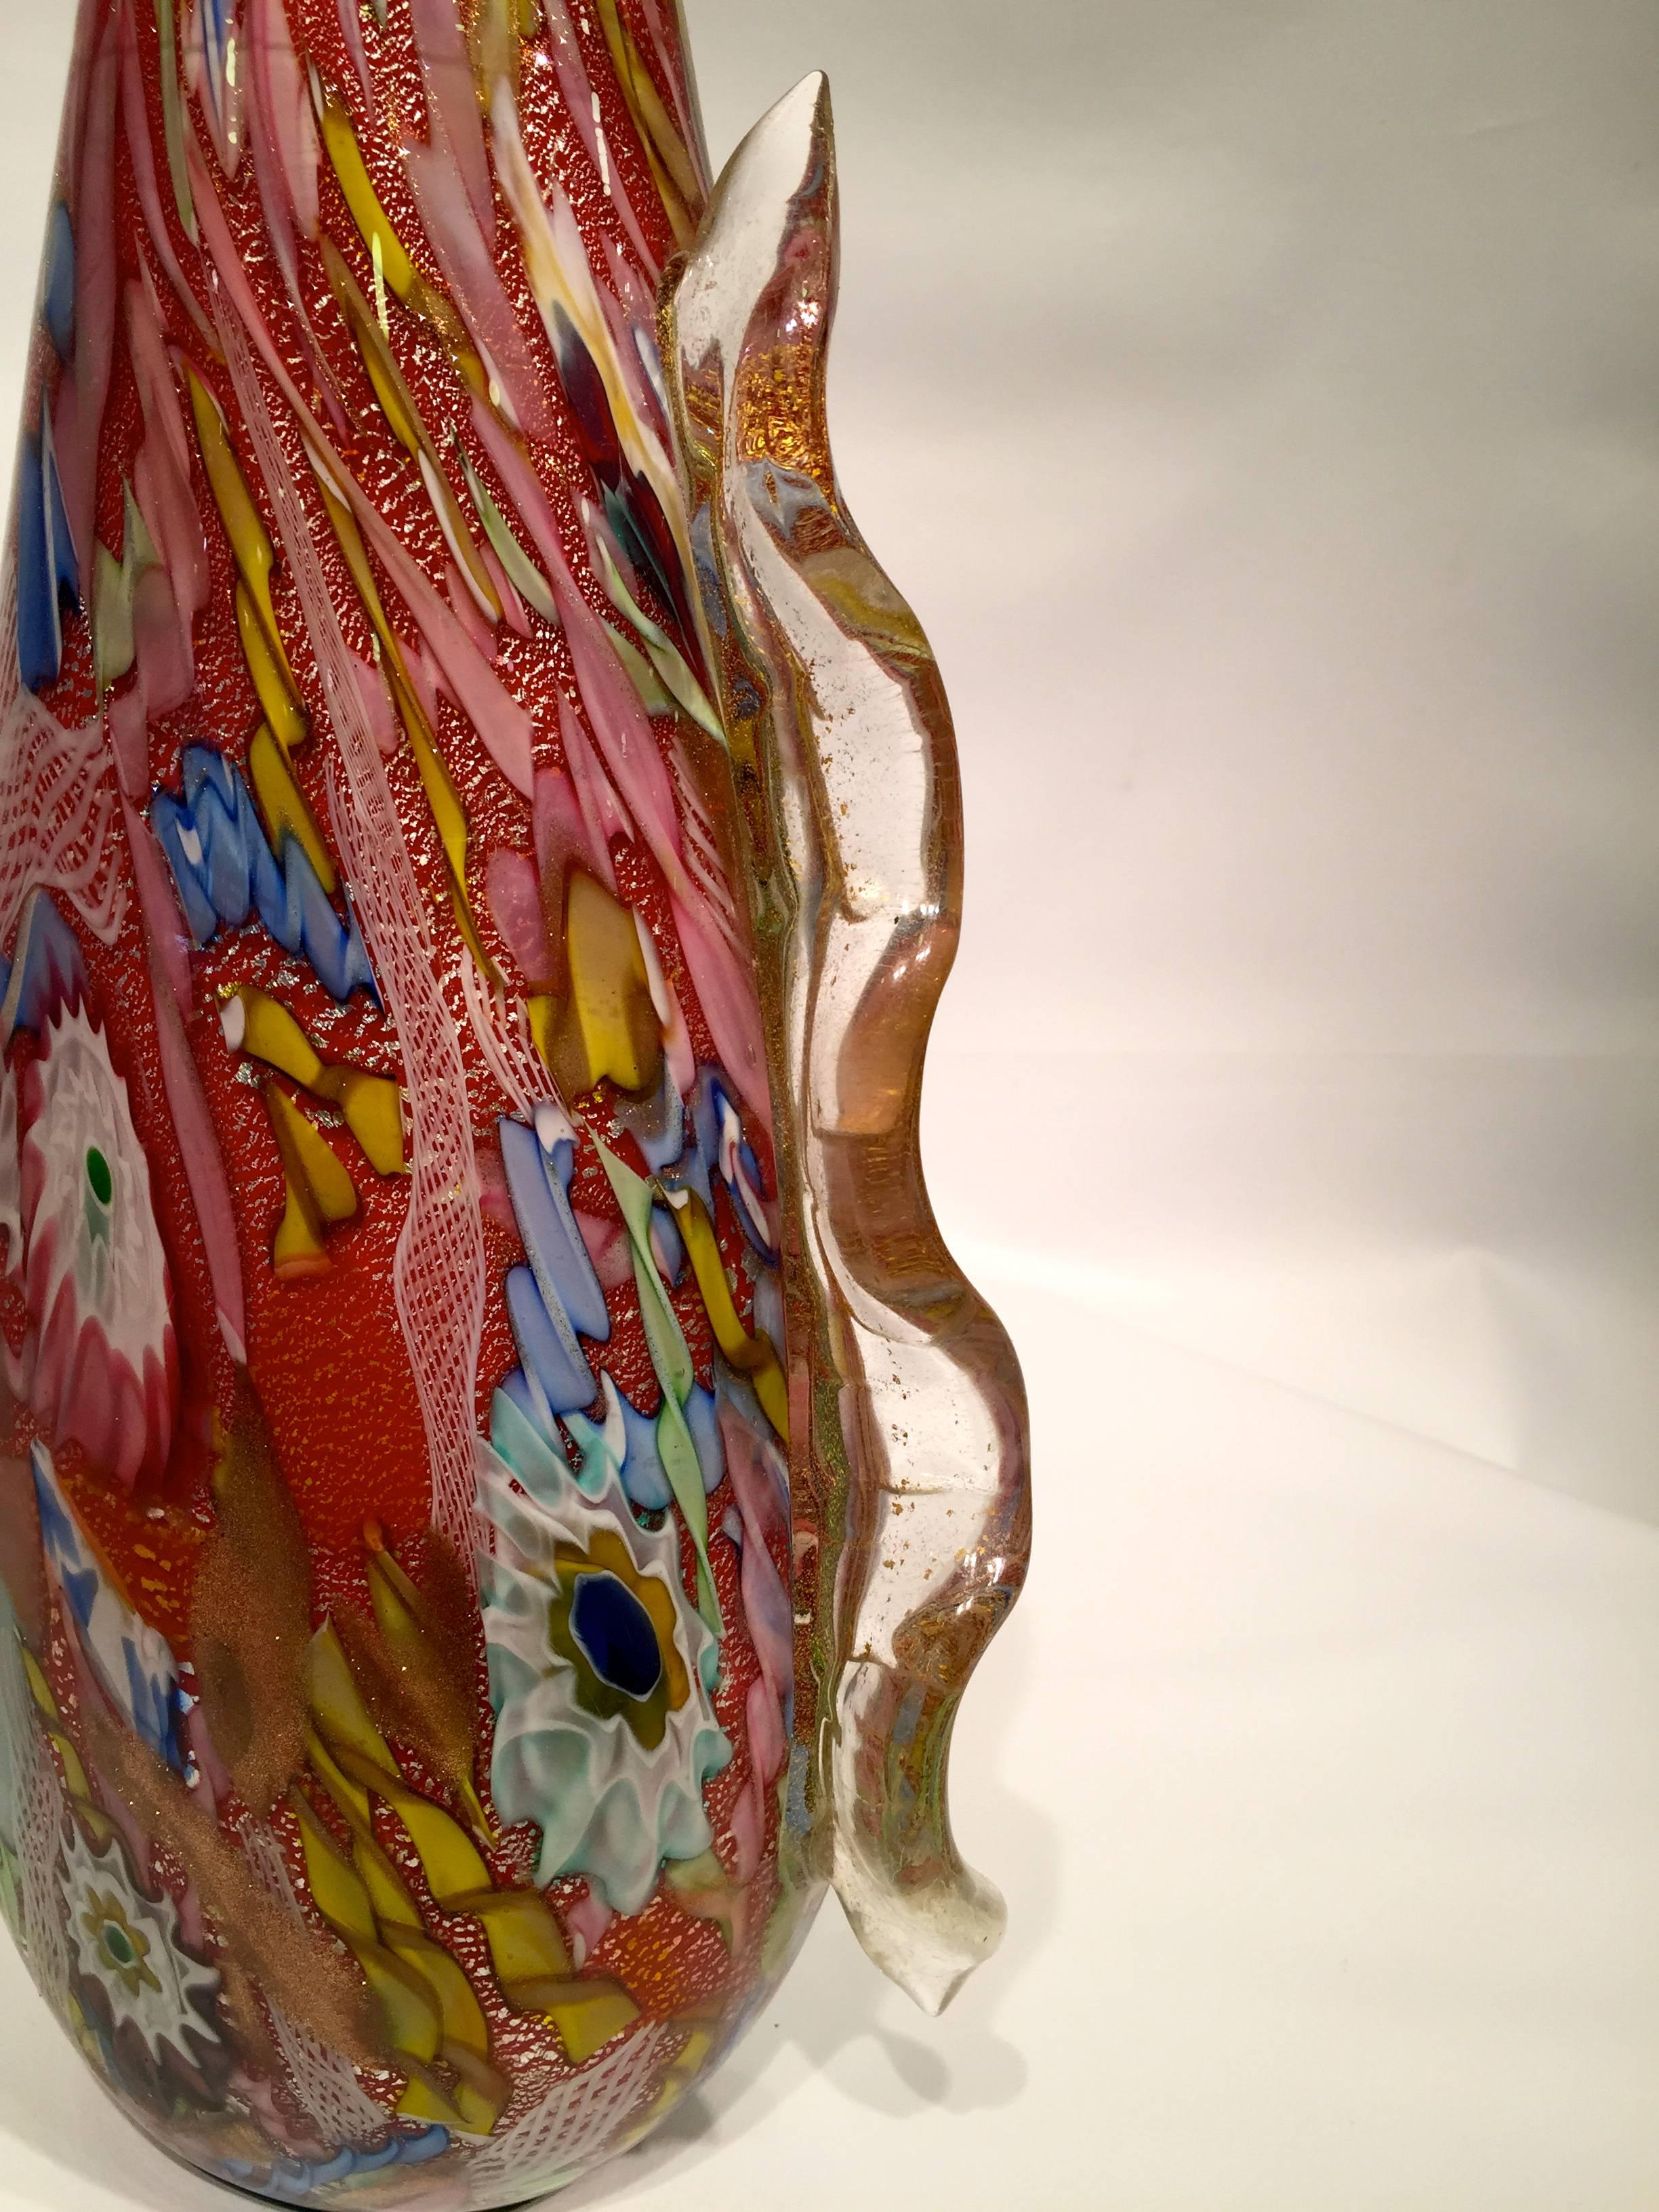 AVeM Vase, Artistic Blown Murano Glass, Multicolored and Red, circa 1950 For Sale 2